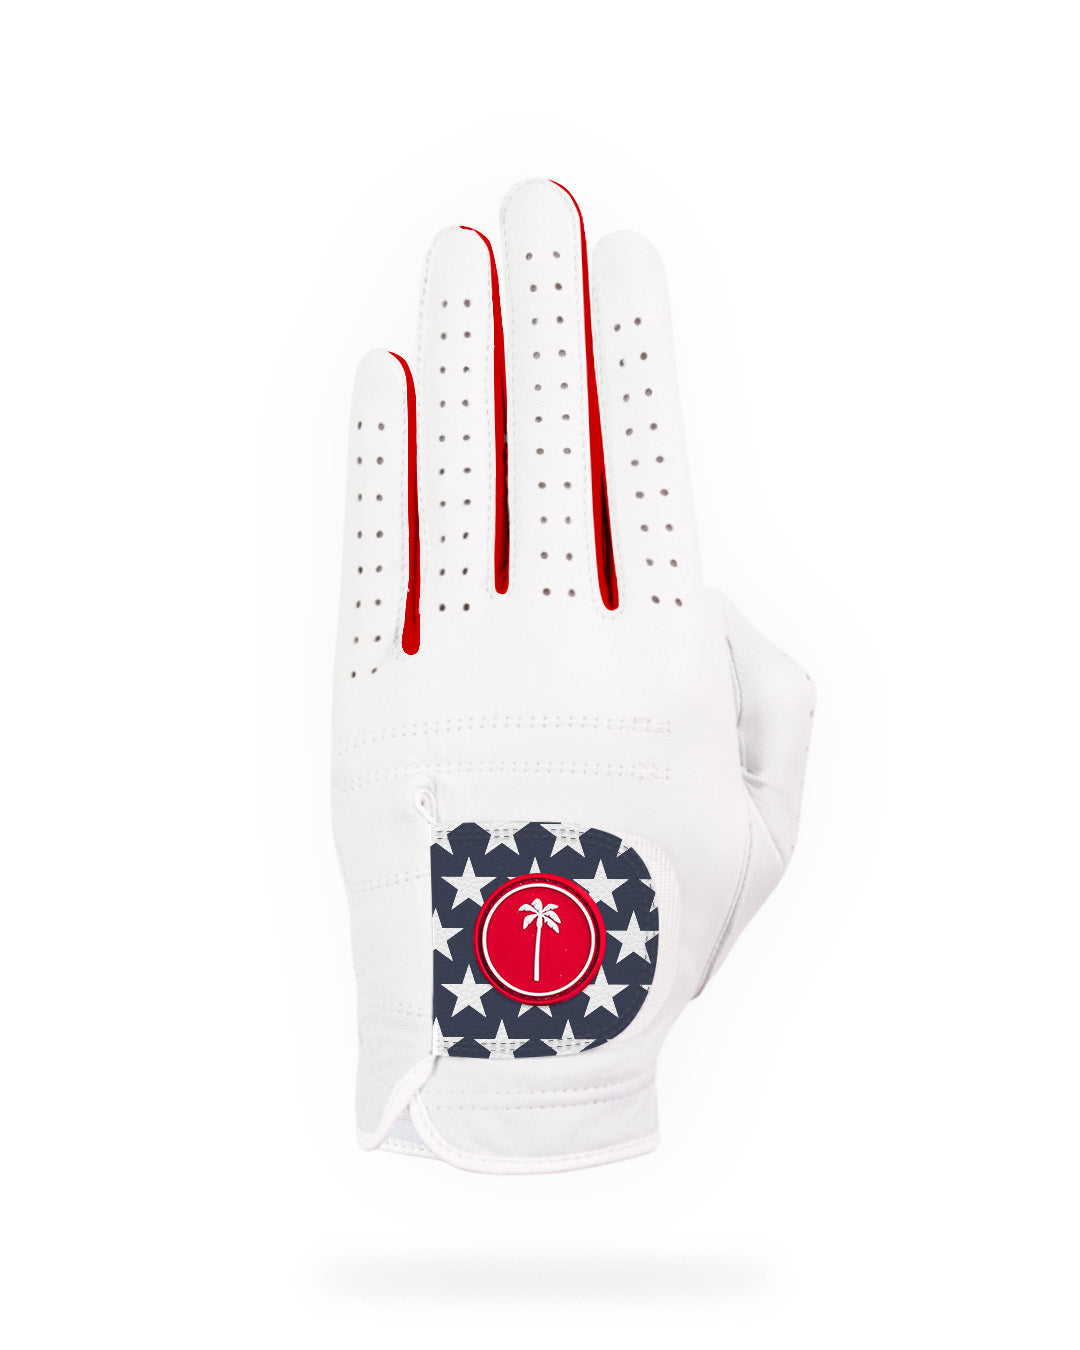 Palm Golf Co. Men's Stars and Stripes Glove